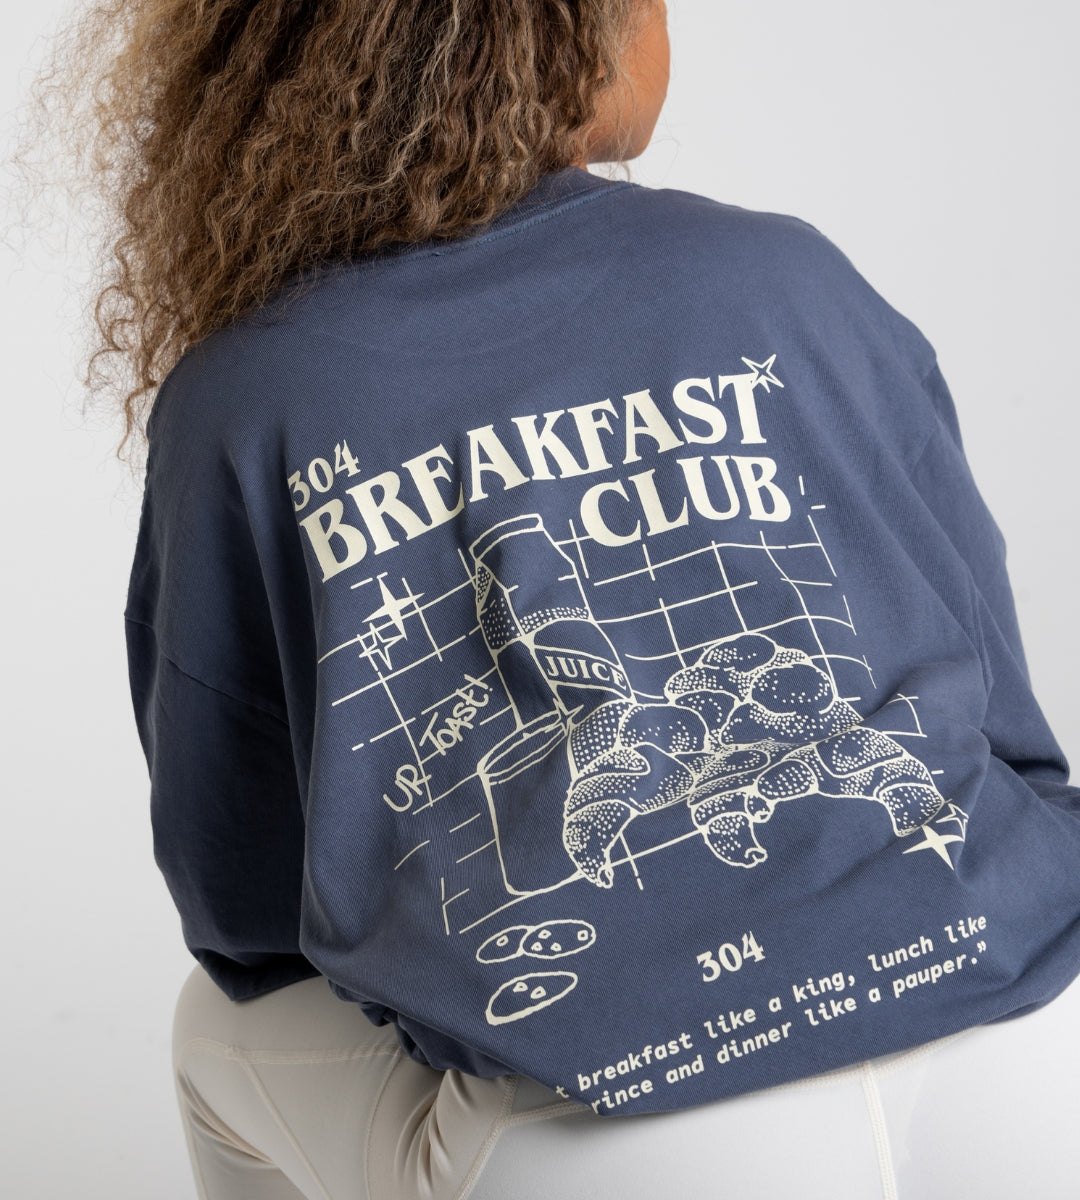 304 Womens Breakfast Club T-shirt Faded Indigo